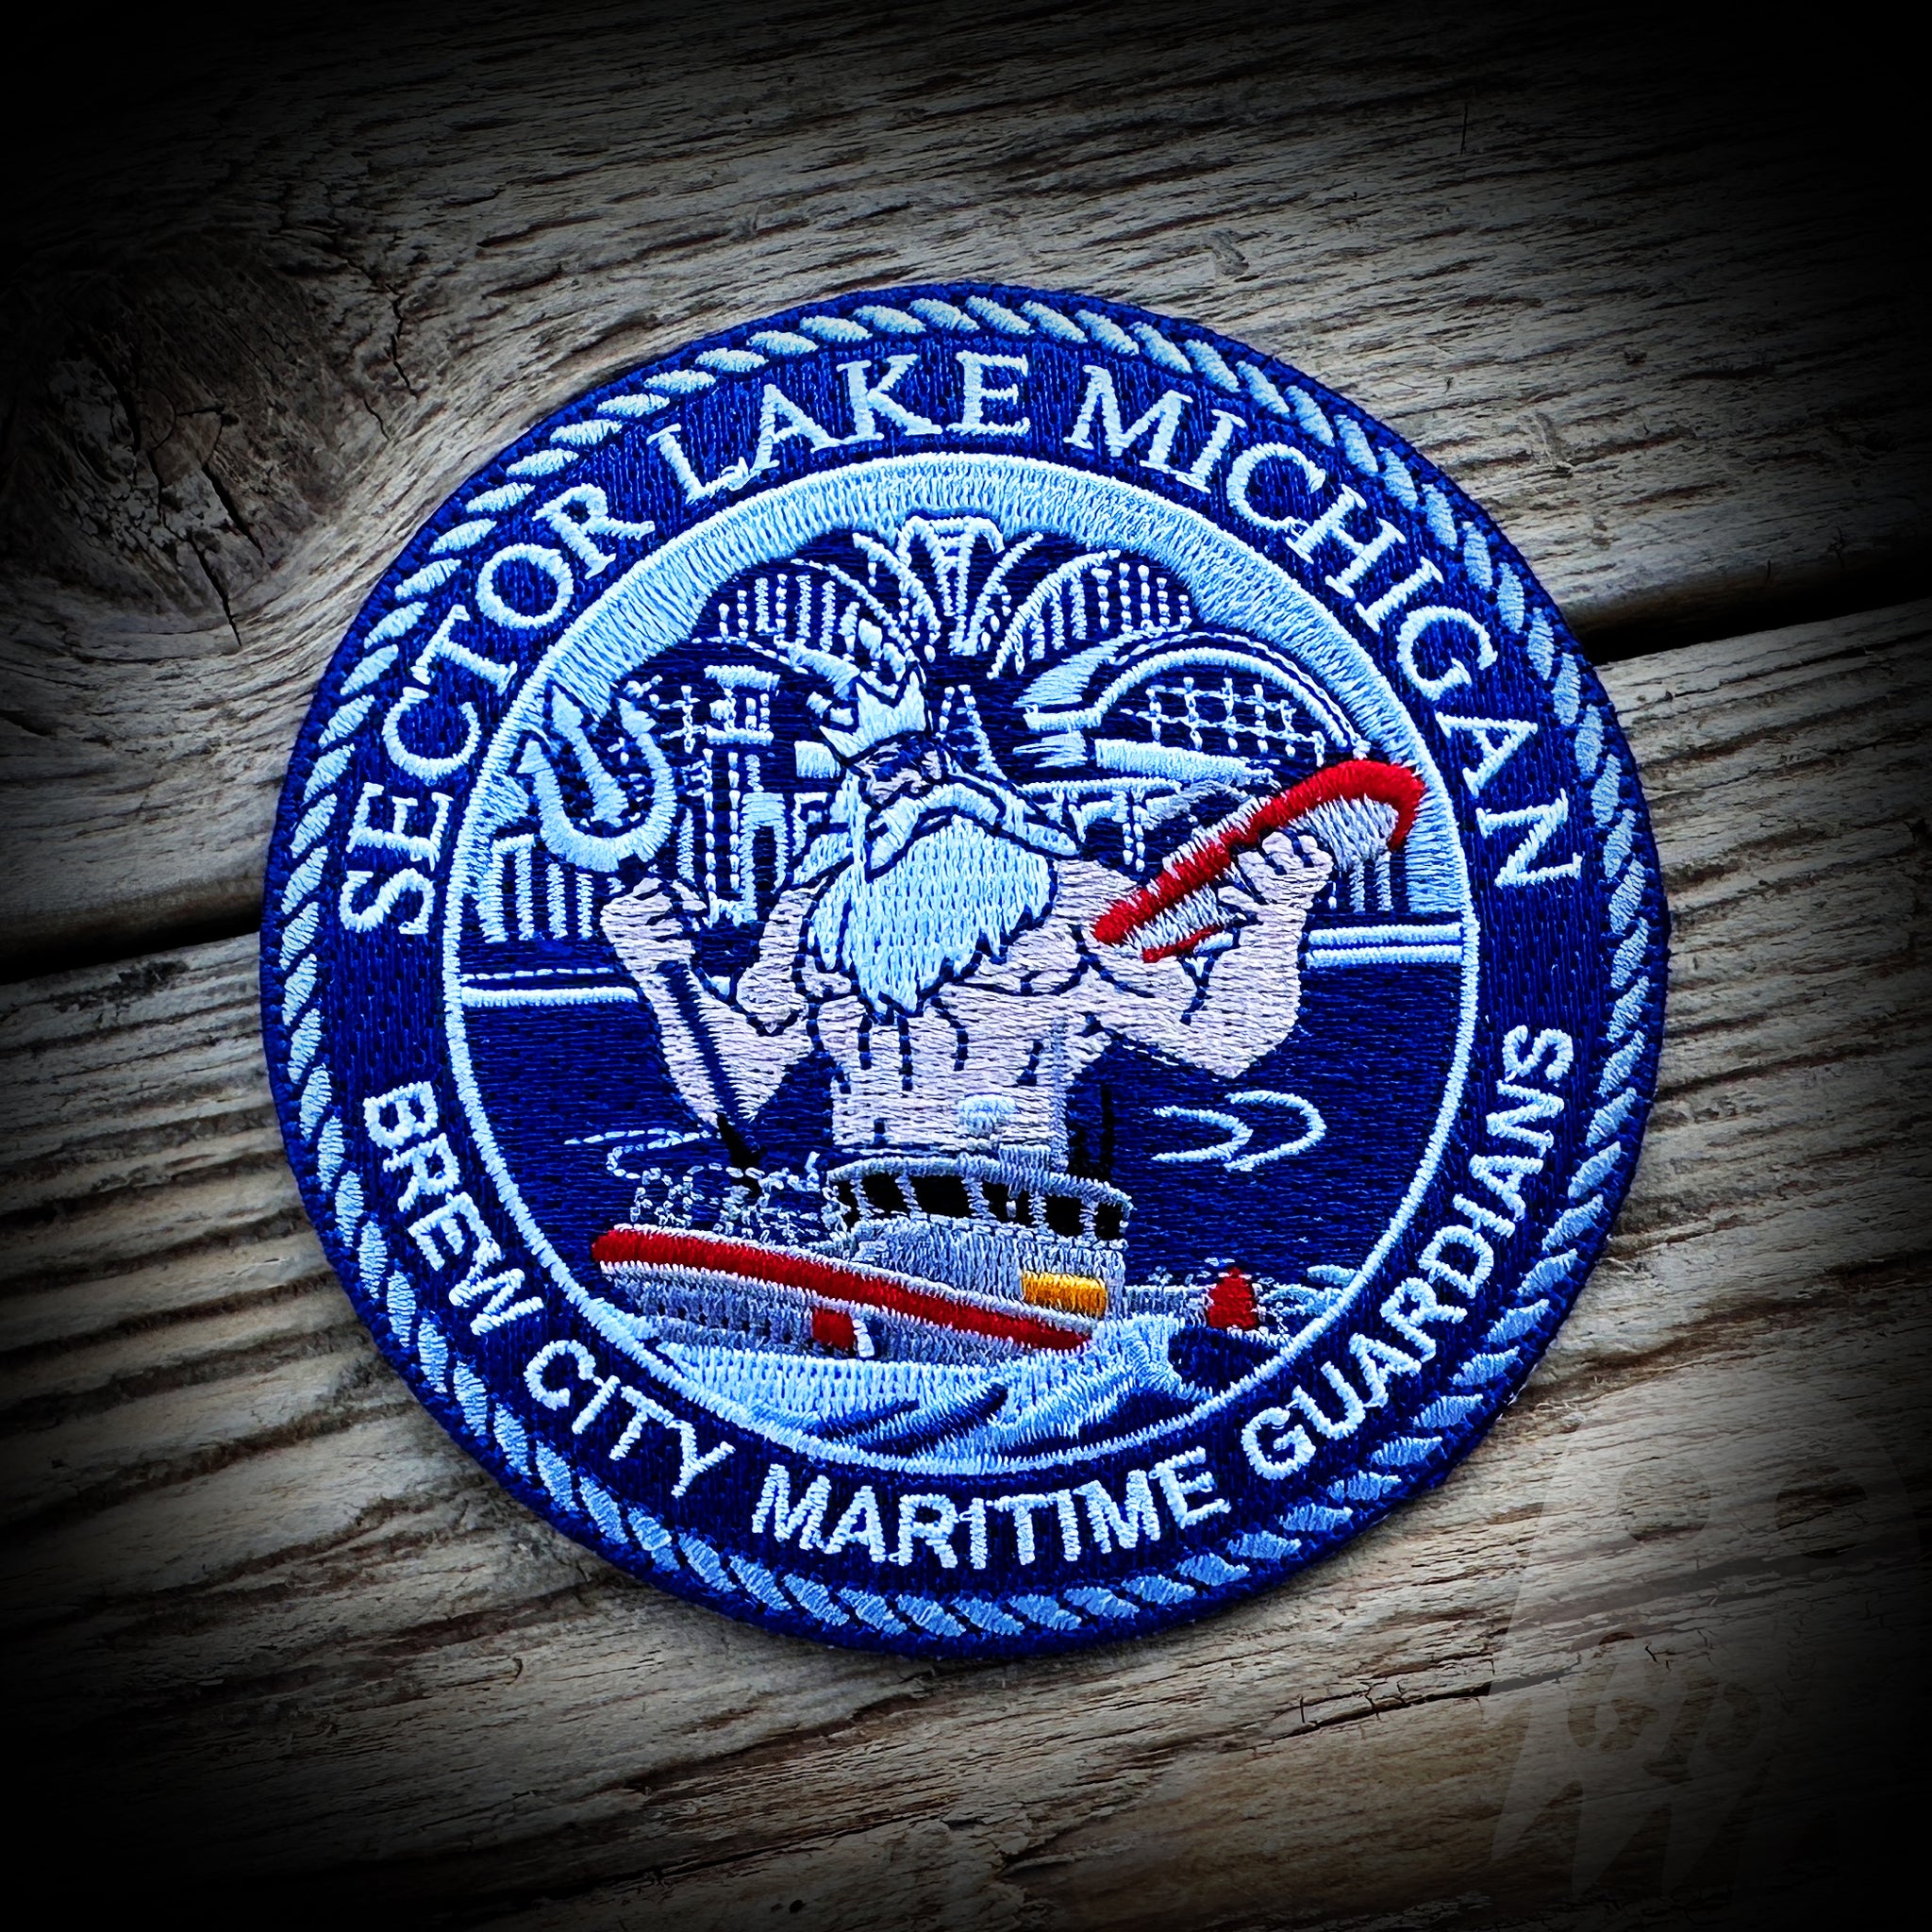 US Coast Guard Sector Lake Michigan Patch